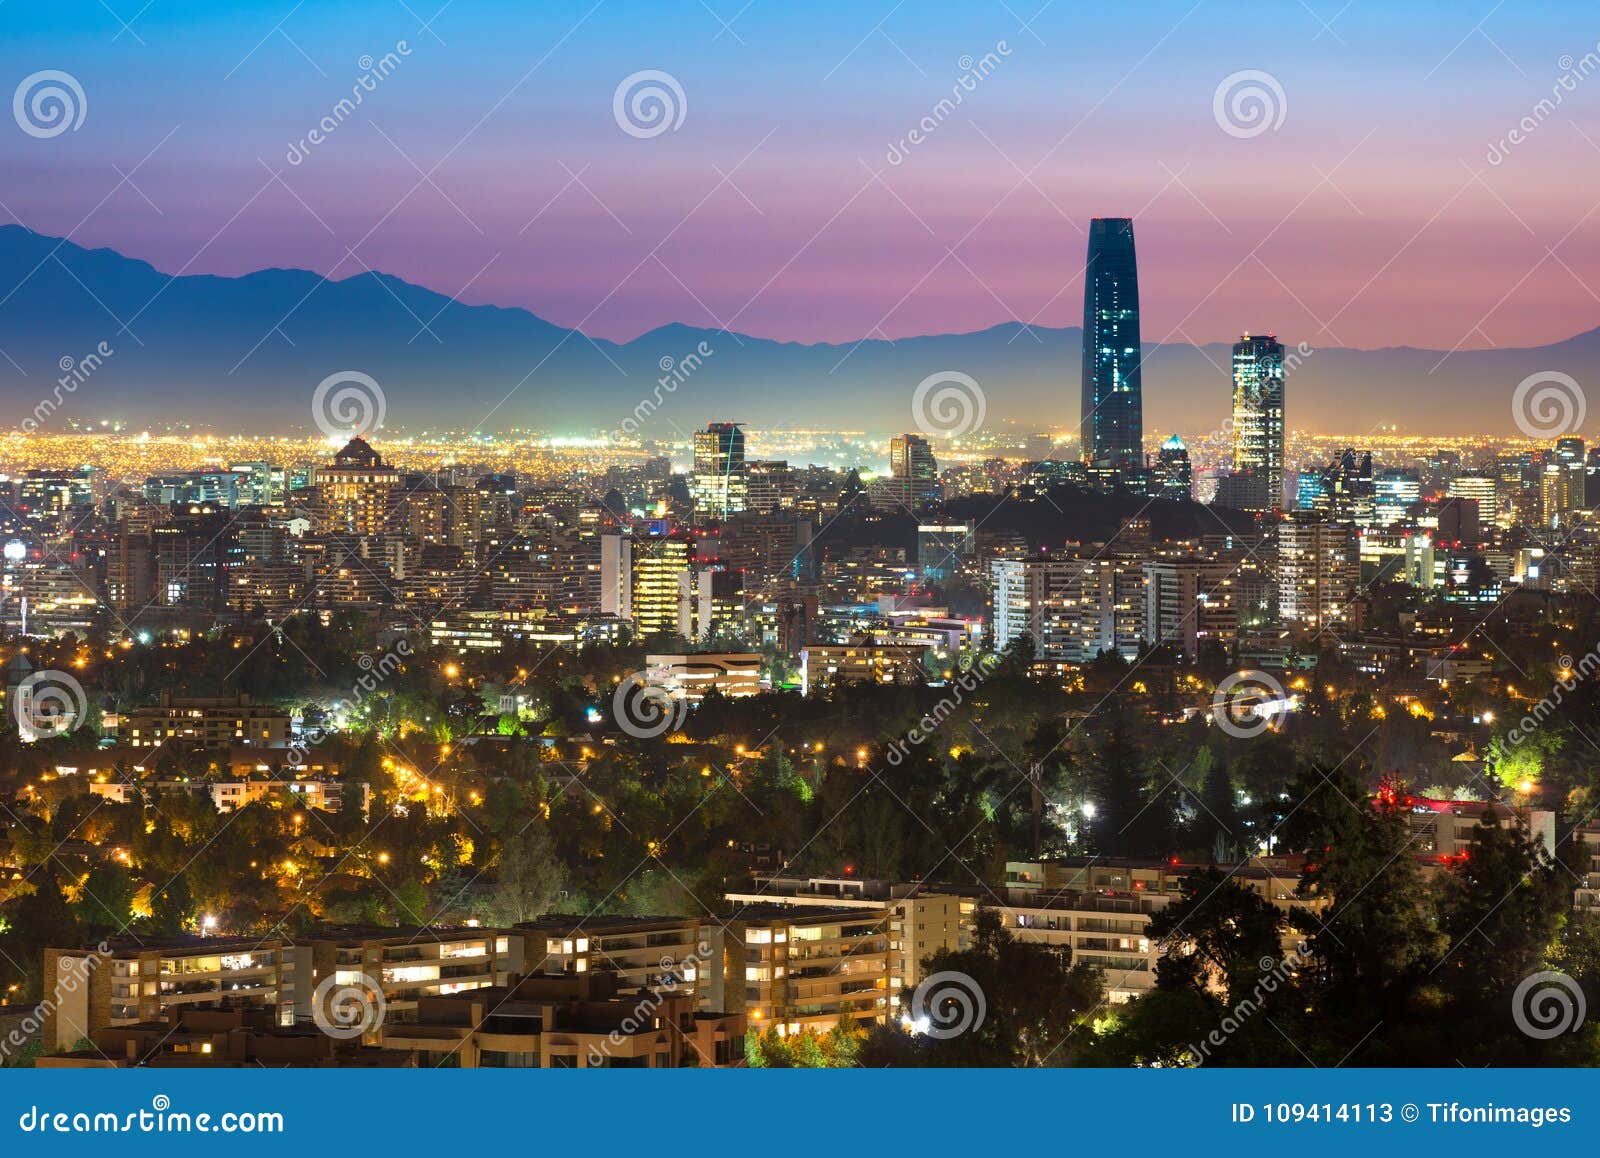 panoramic view of santiago de chile at night